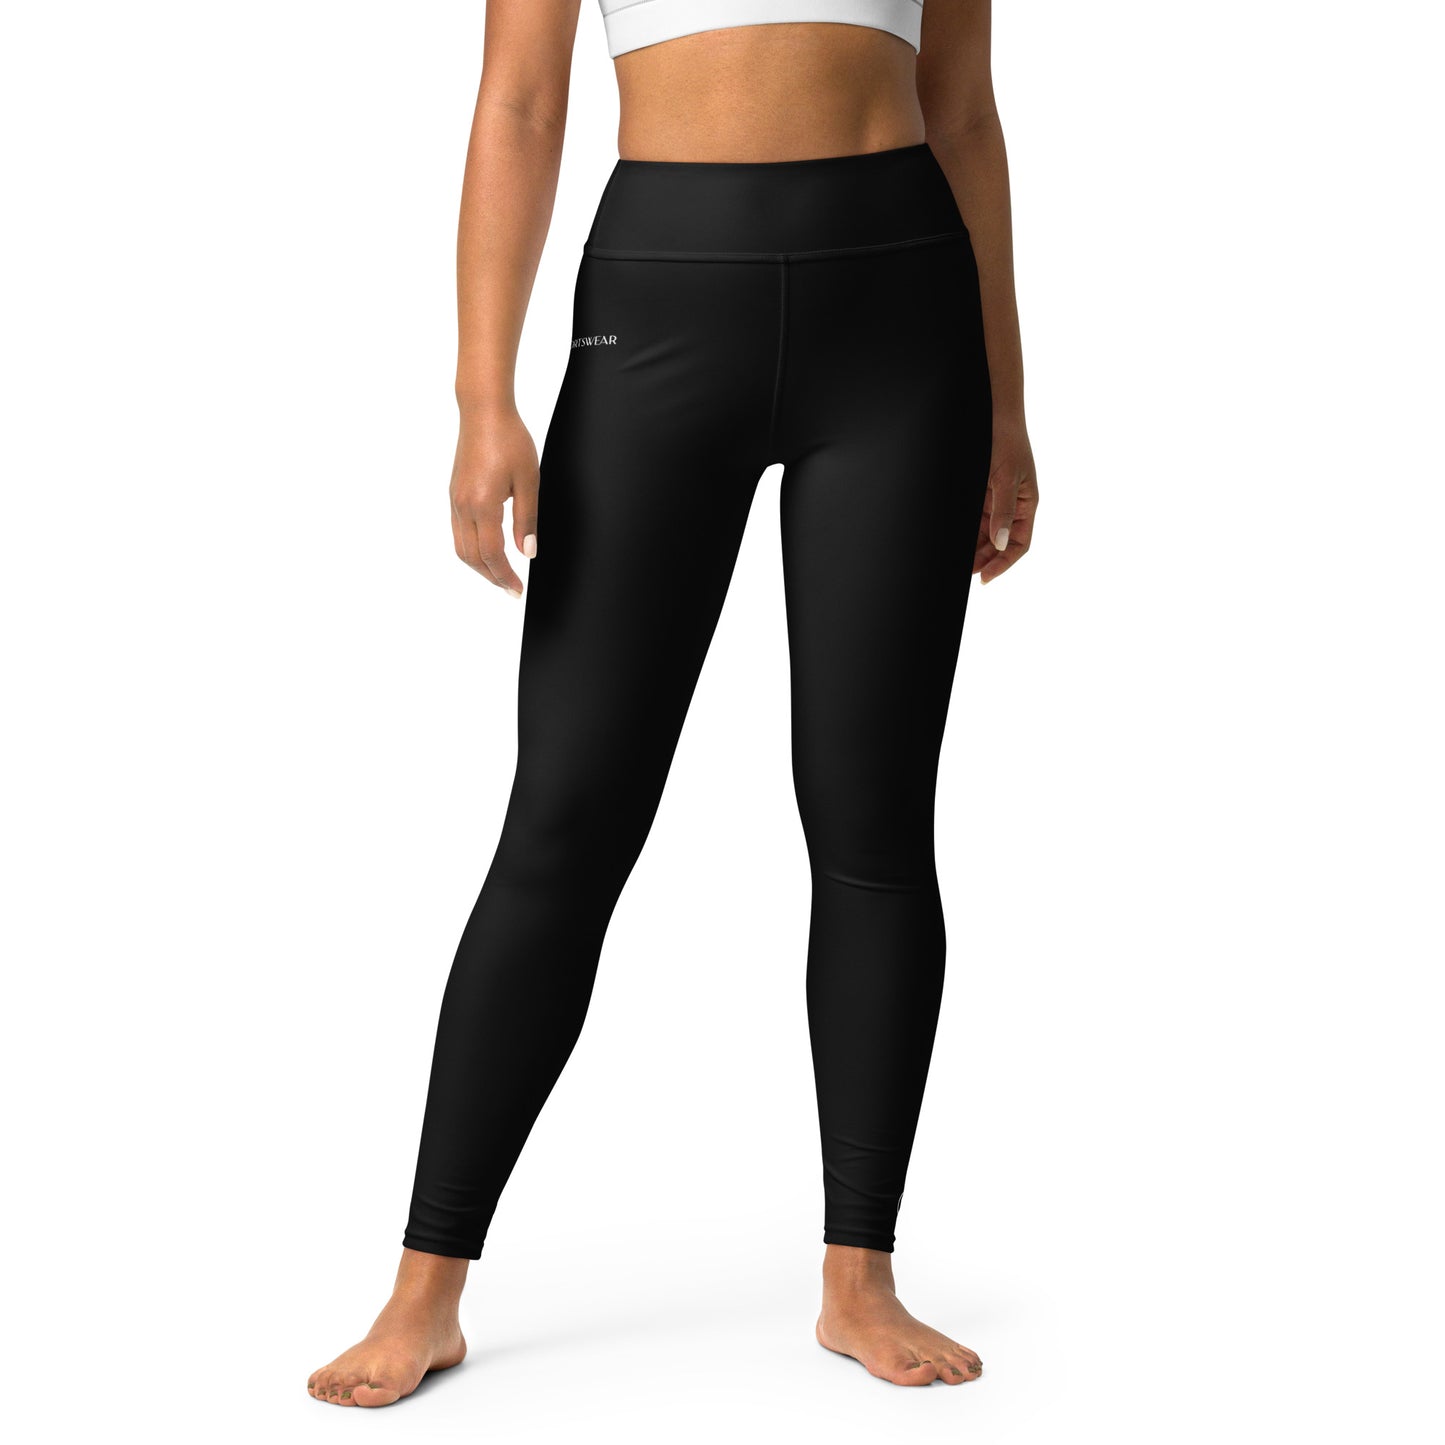 Color match leggings, women’s leggings, Humble Sportswear, women’s active leggings, yoga leggings for women, Pilates leggings